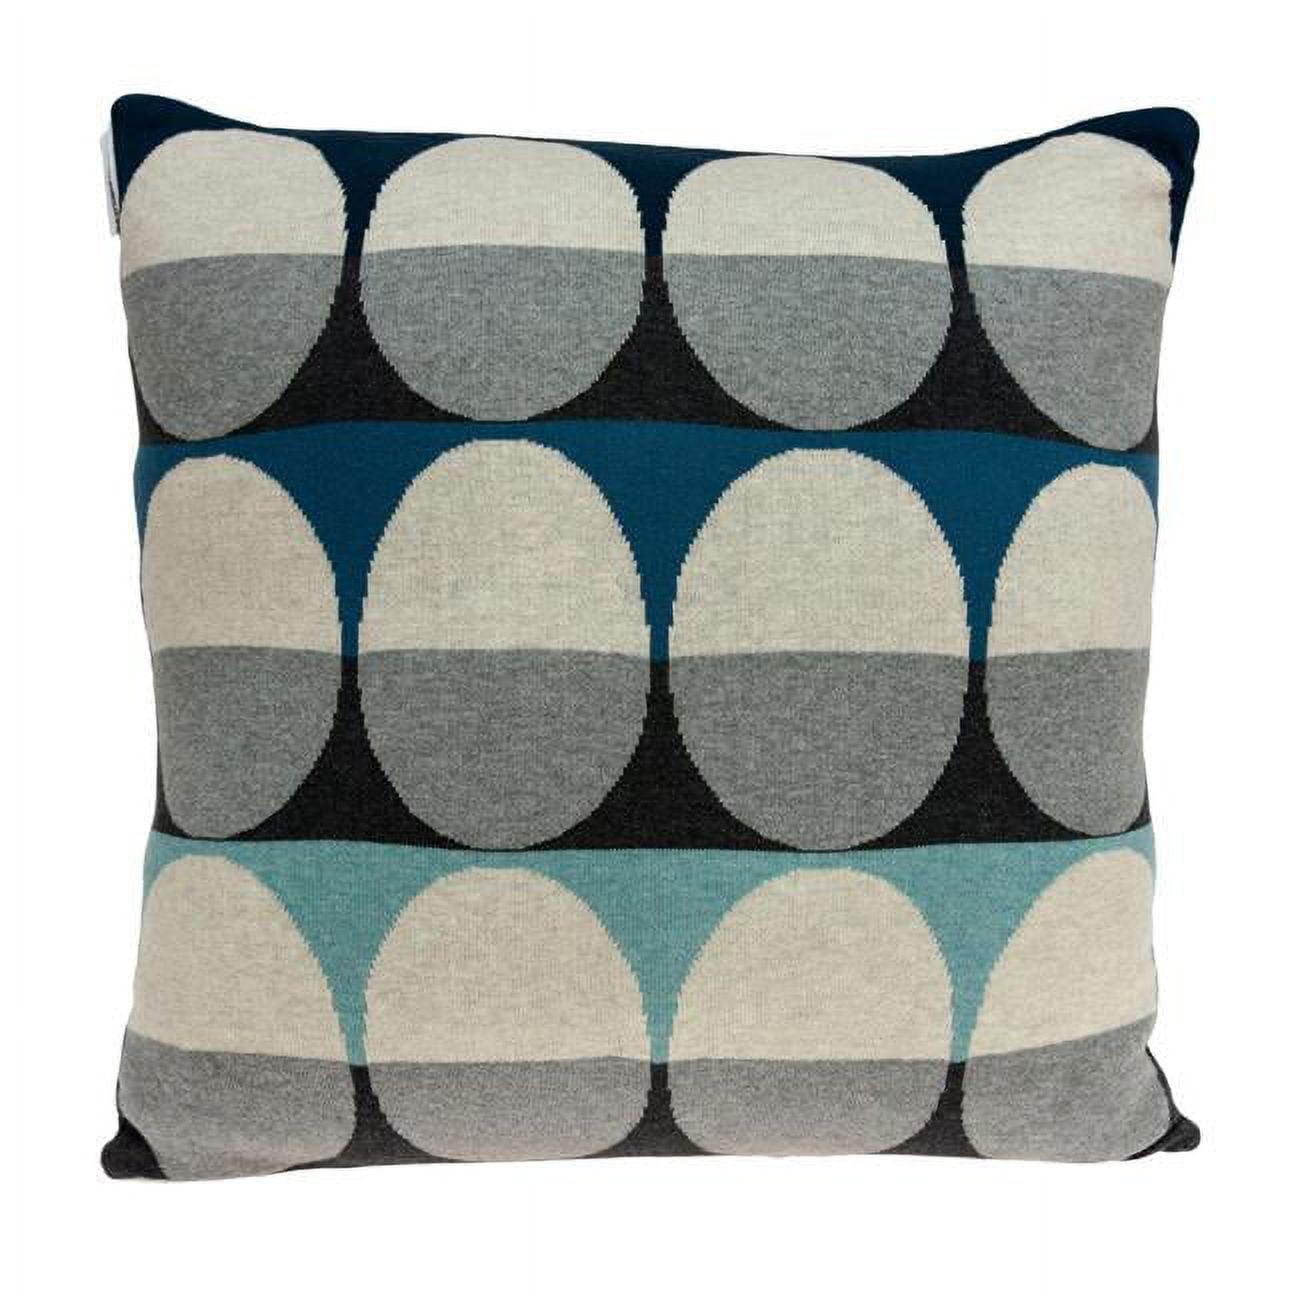 Multicolor Knitted Cotton Square Decorative Pillow - 20x20